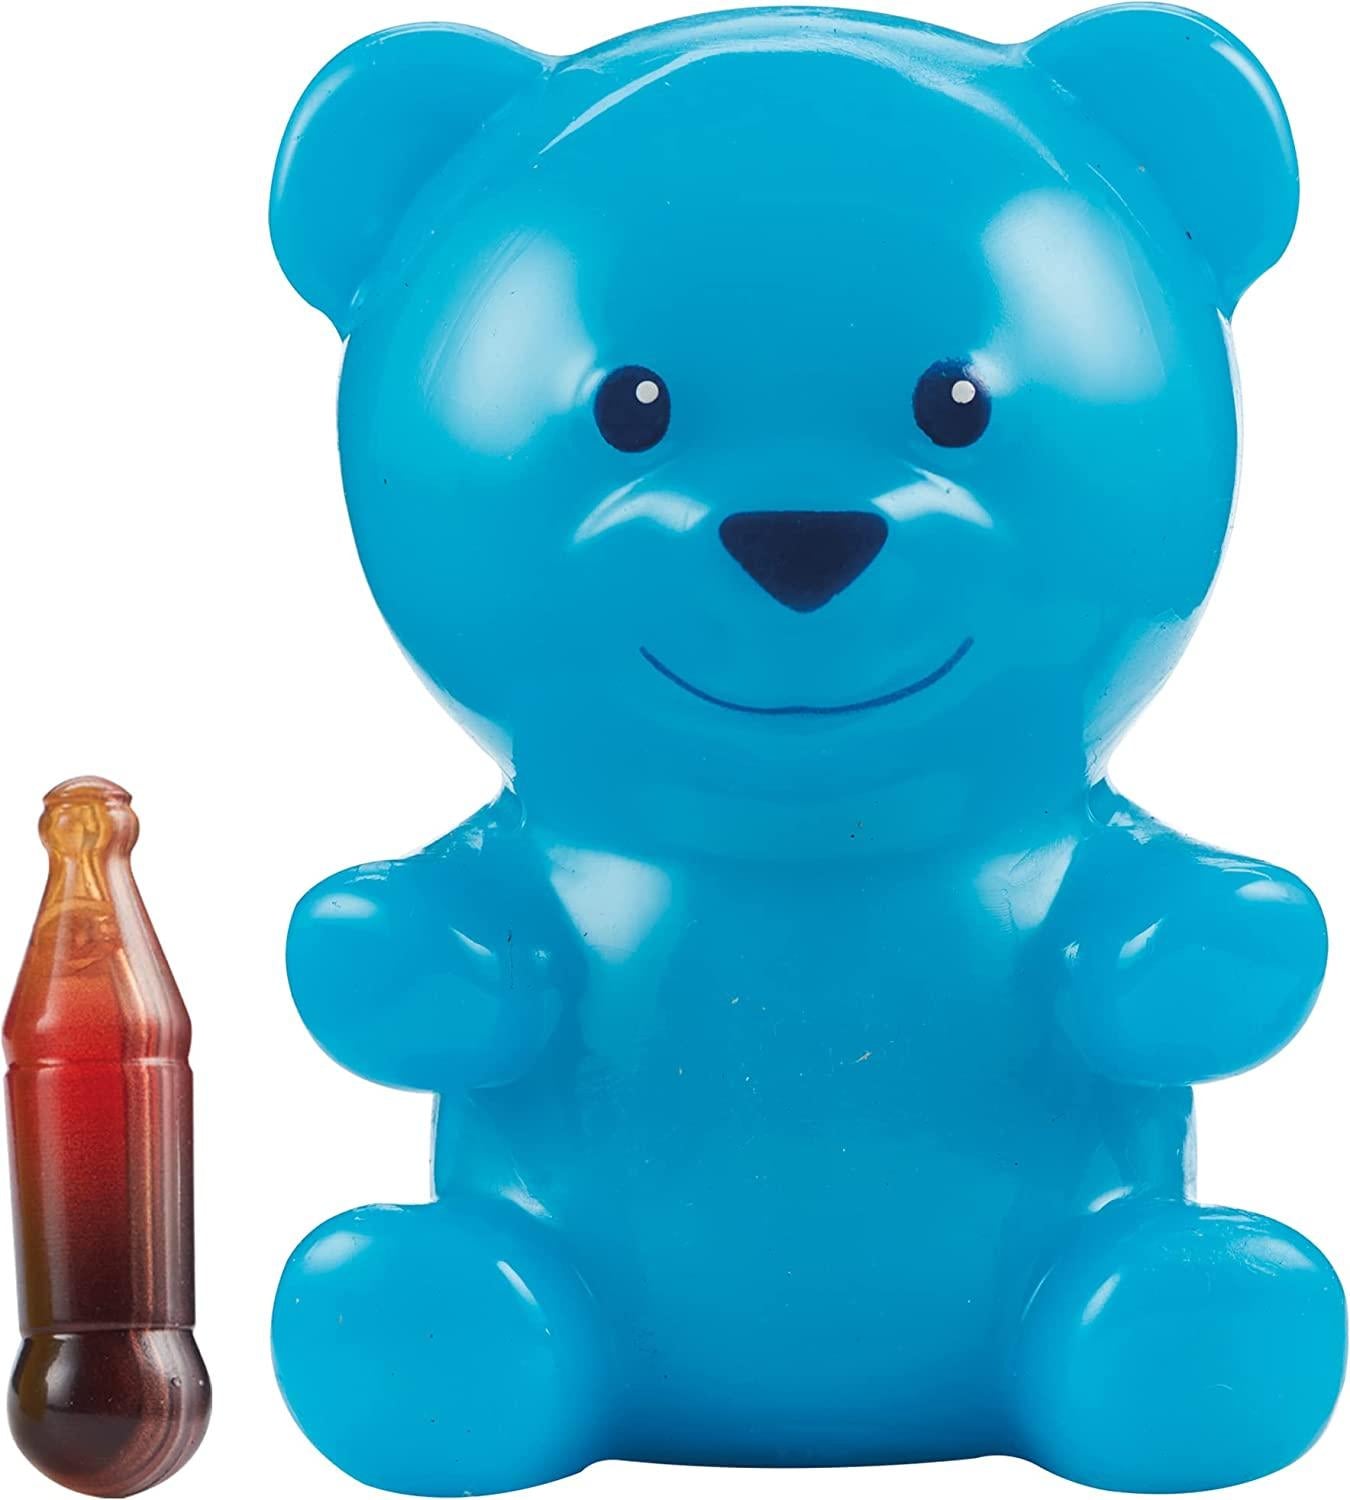 Jiggly Pets Gummymals BLUE Interactive Super Squishy Gummy Bear